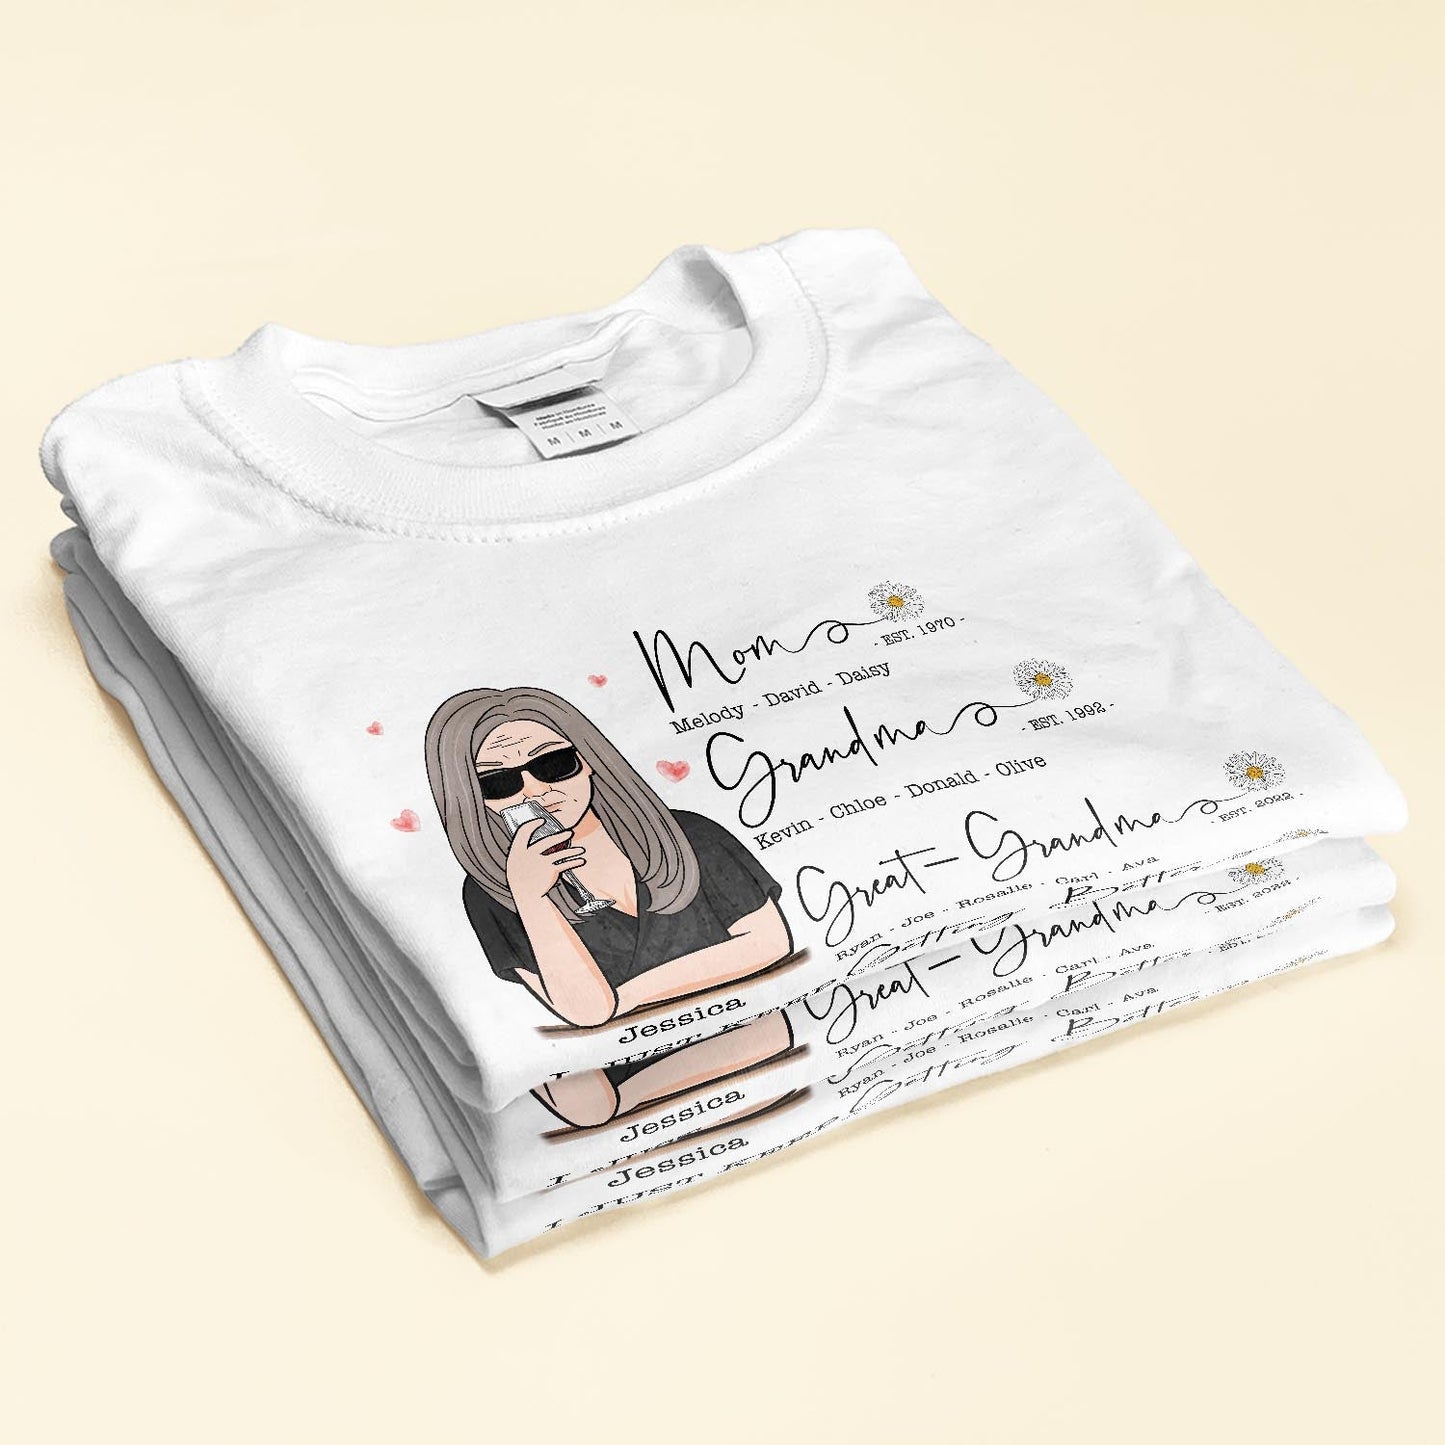 Mom Grandma Great-Grandma - Personalized Shirt - Pregnancy, Baby Announcement Gift For Great-Grandma, Grandma - Baby Reveal To Family